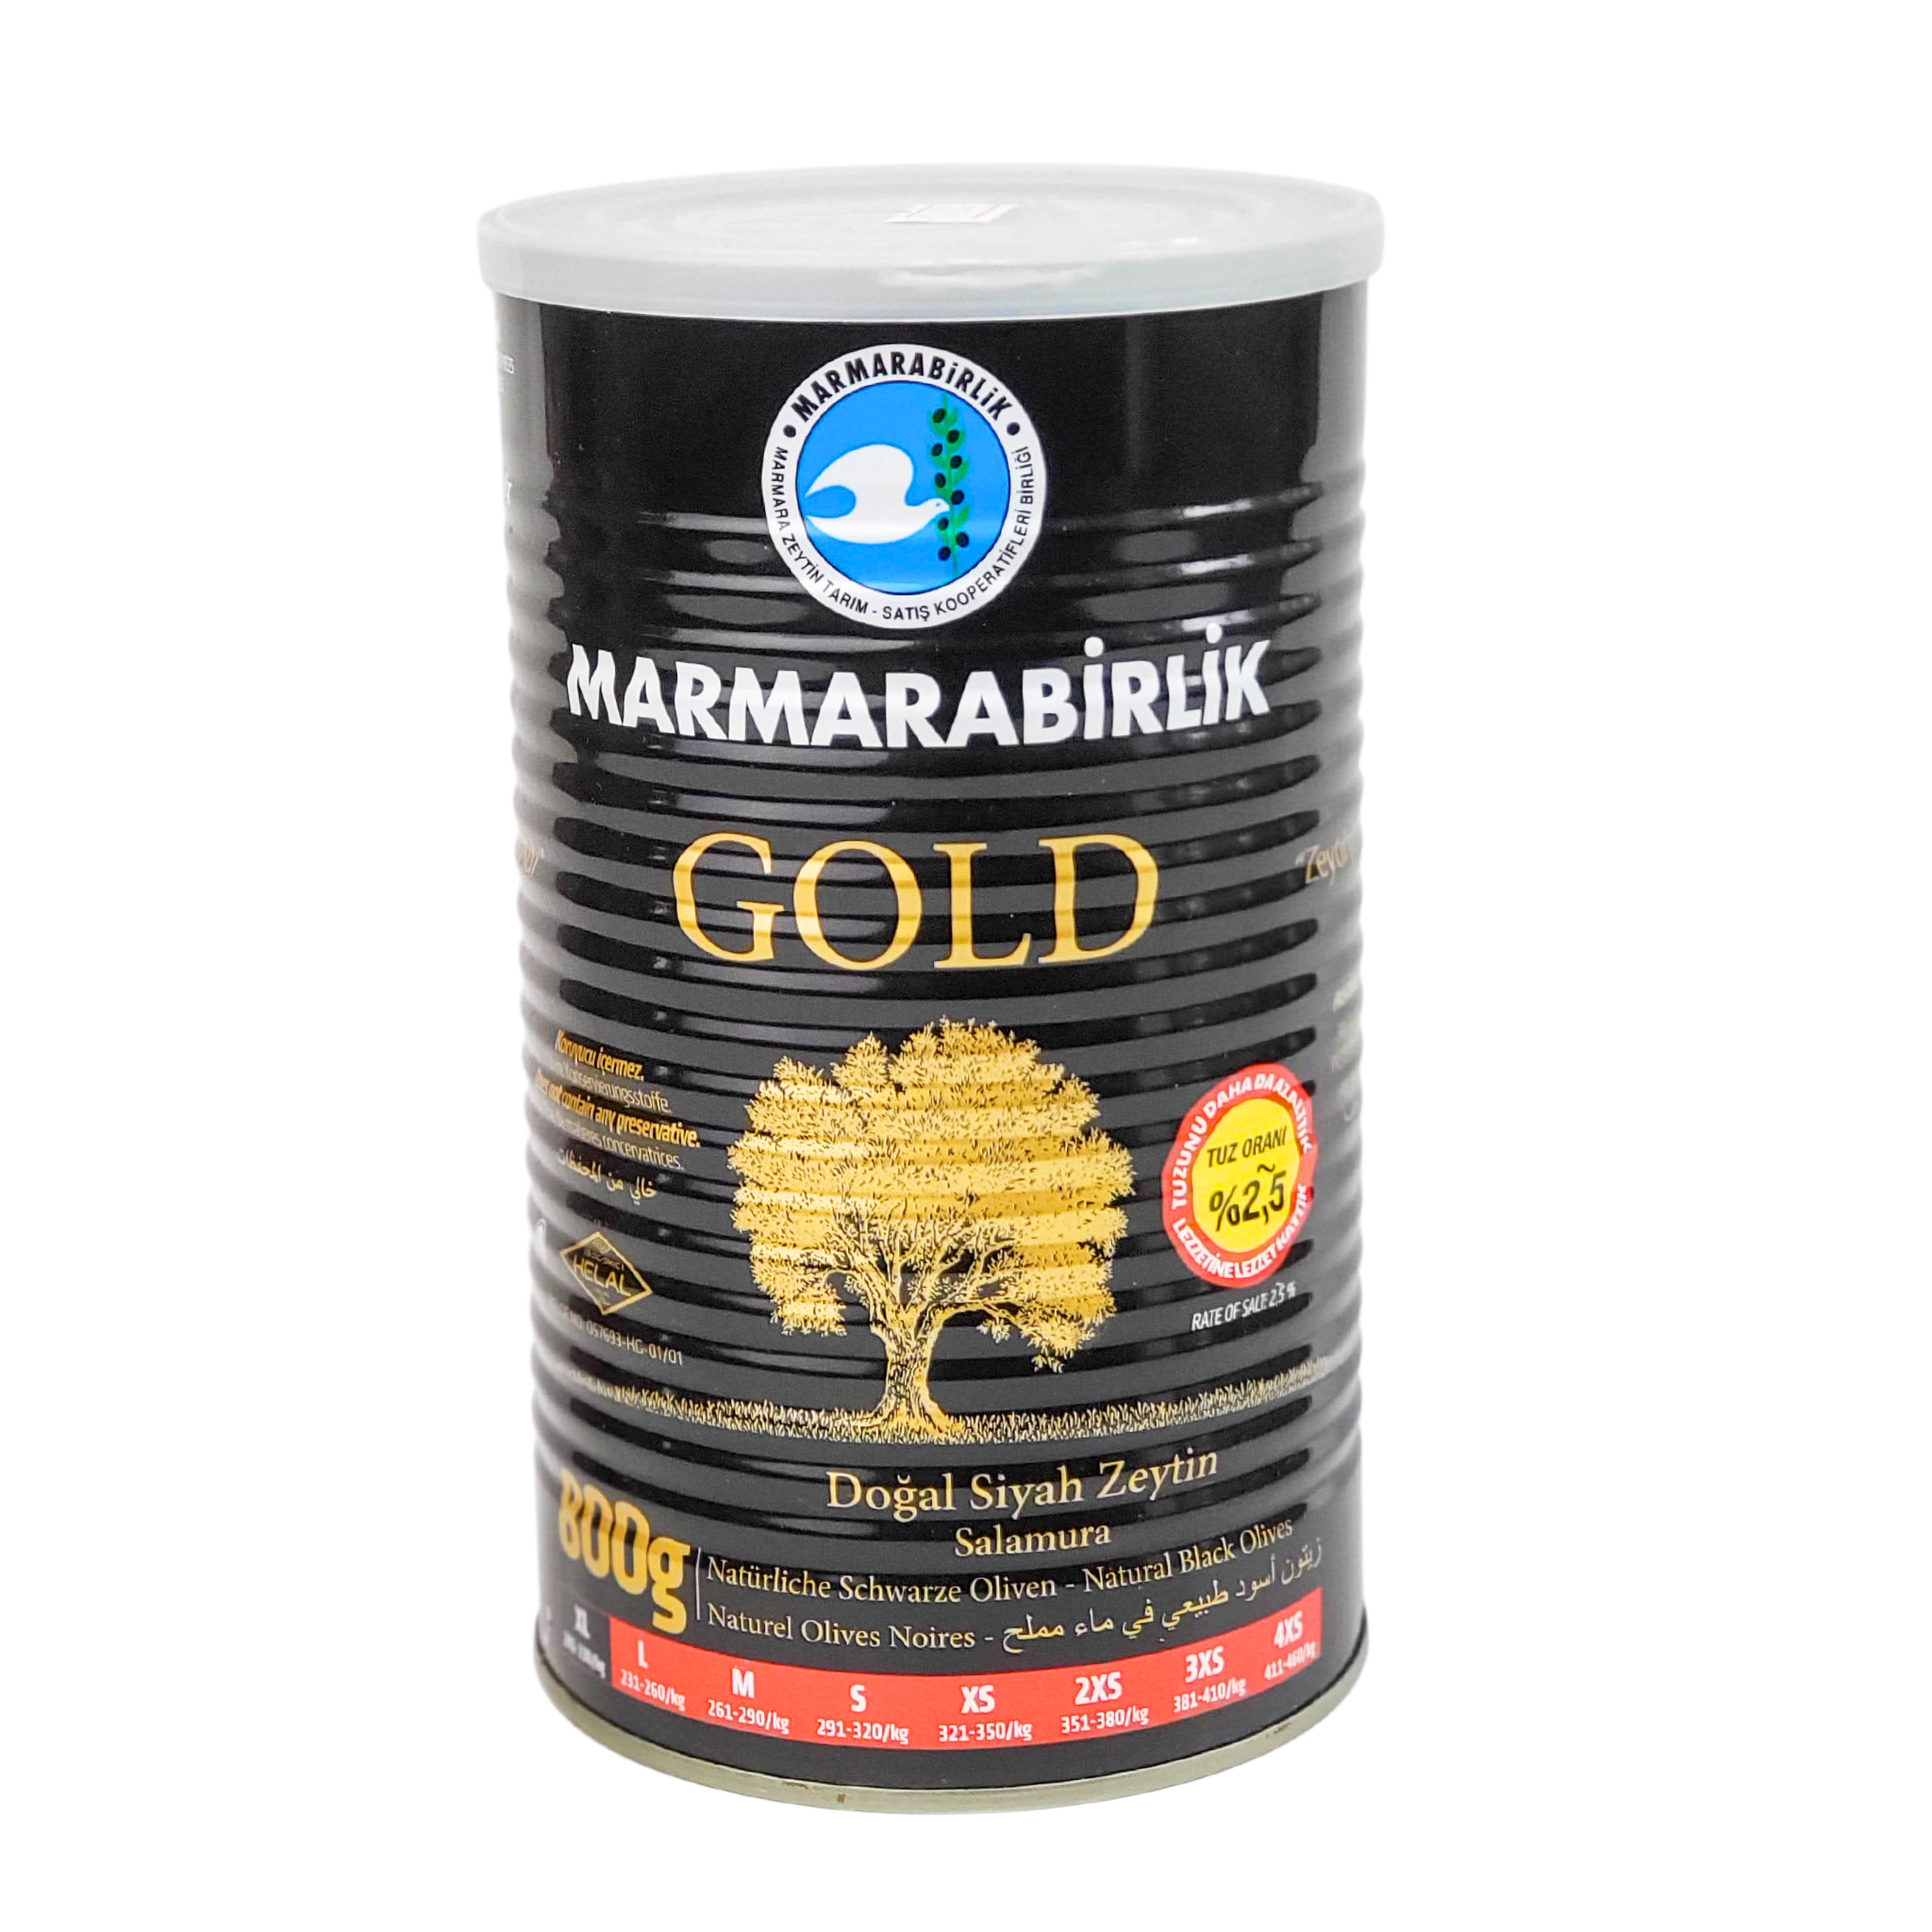 Marmarabirlik Gold Dogal Siyah Zeytin Salamura Natural Black Olives XL 800g